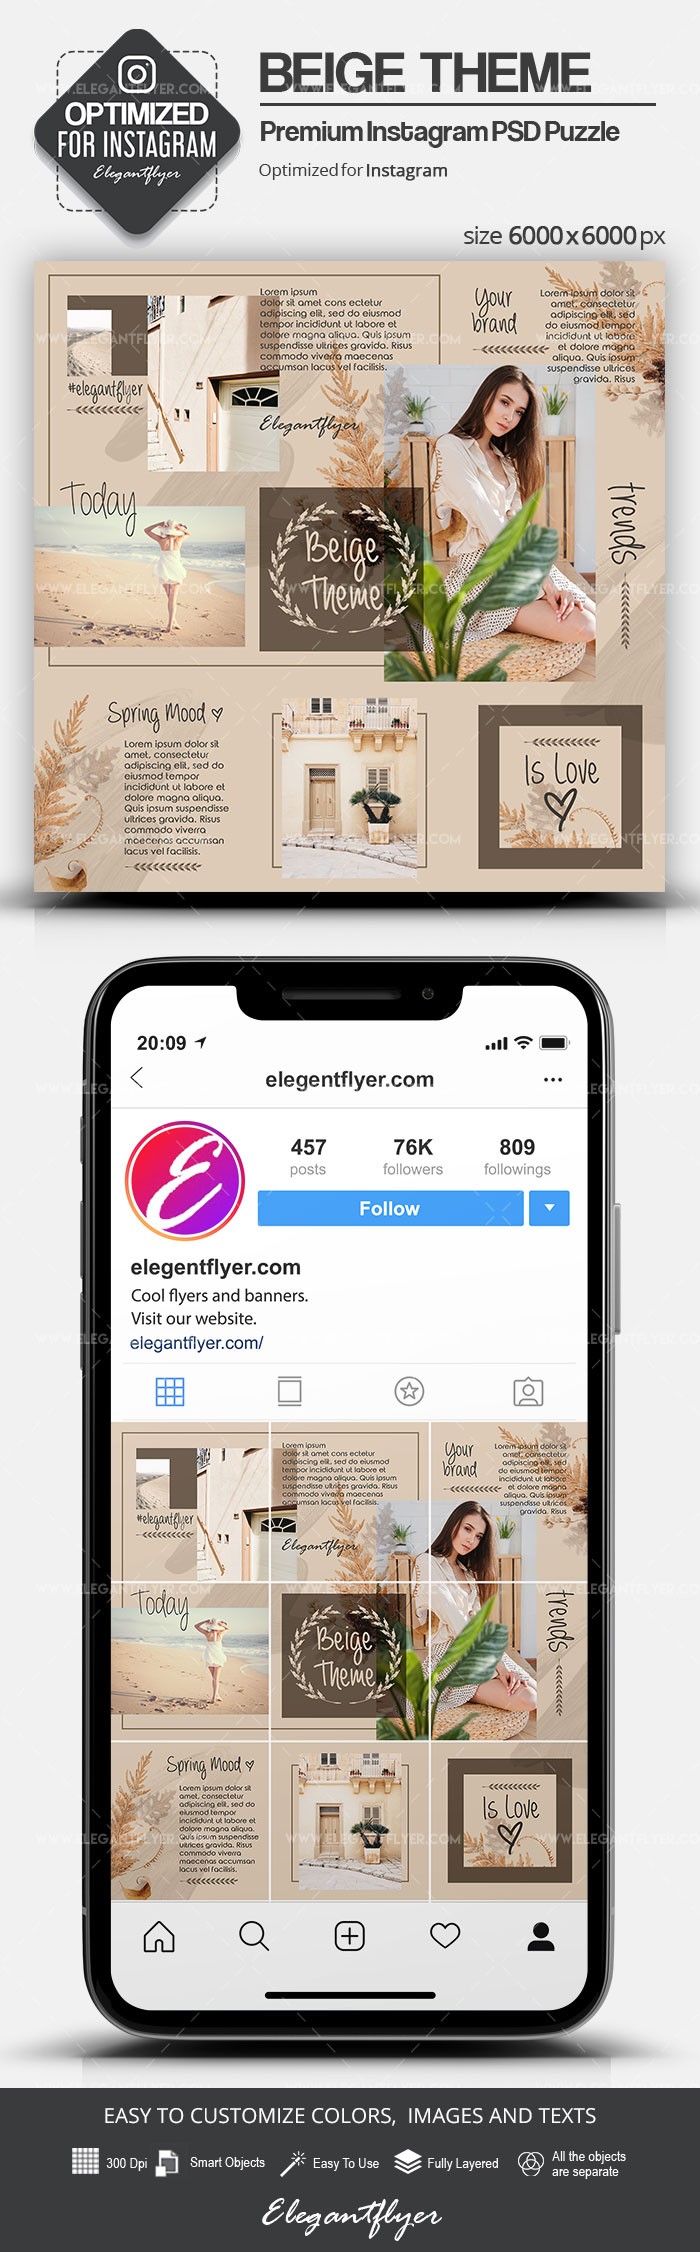 Beige Theme Instagram by ElegantFlyer